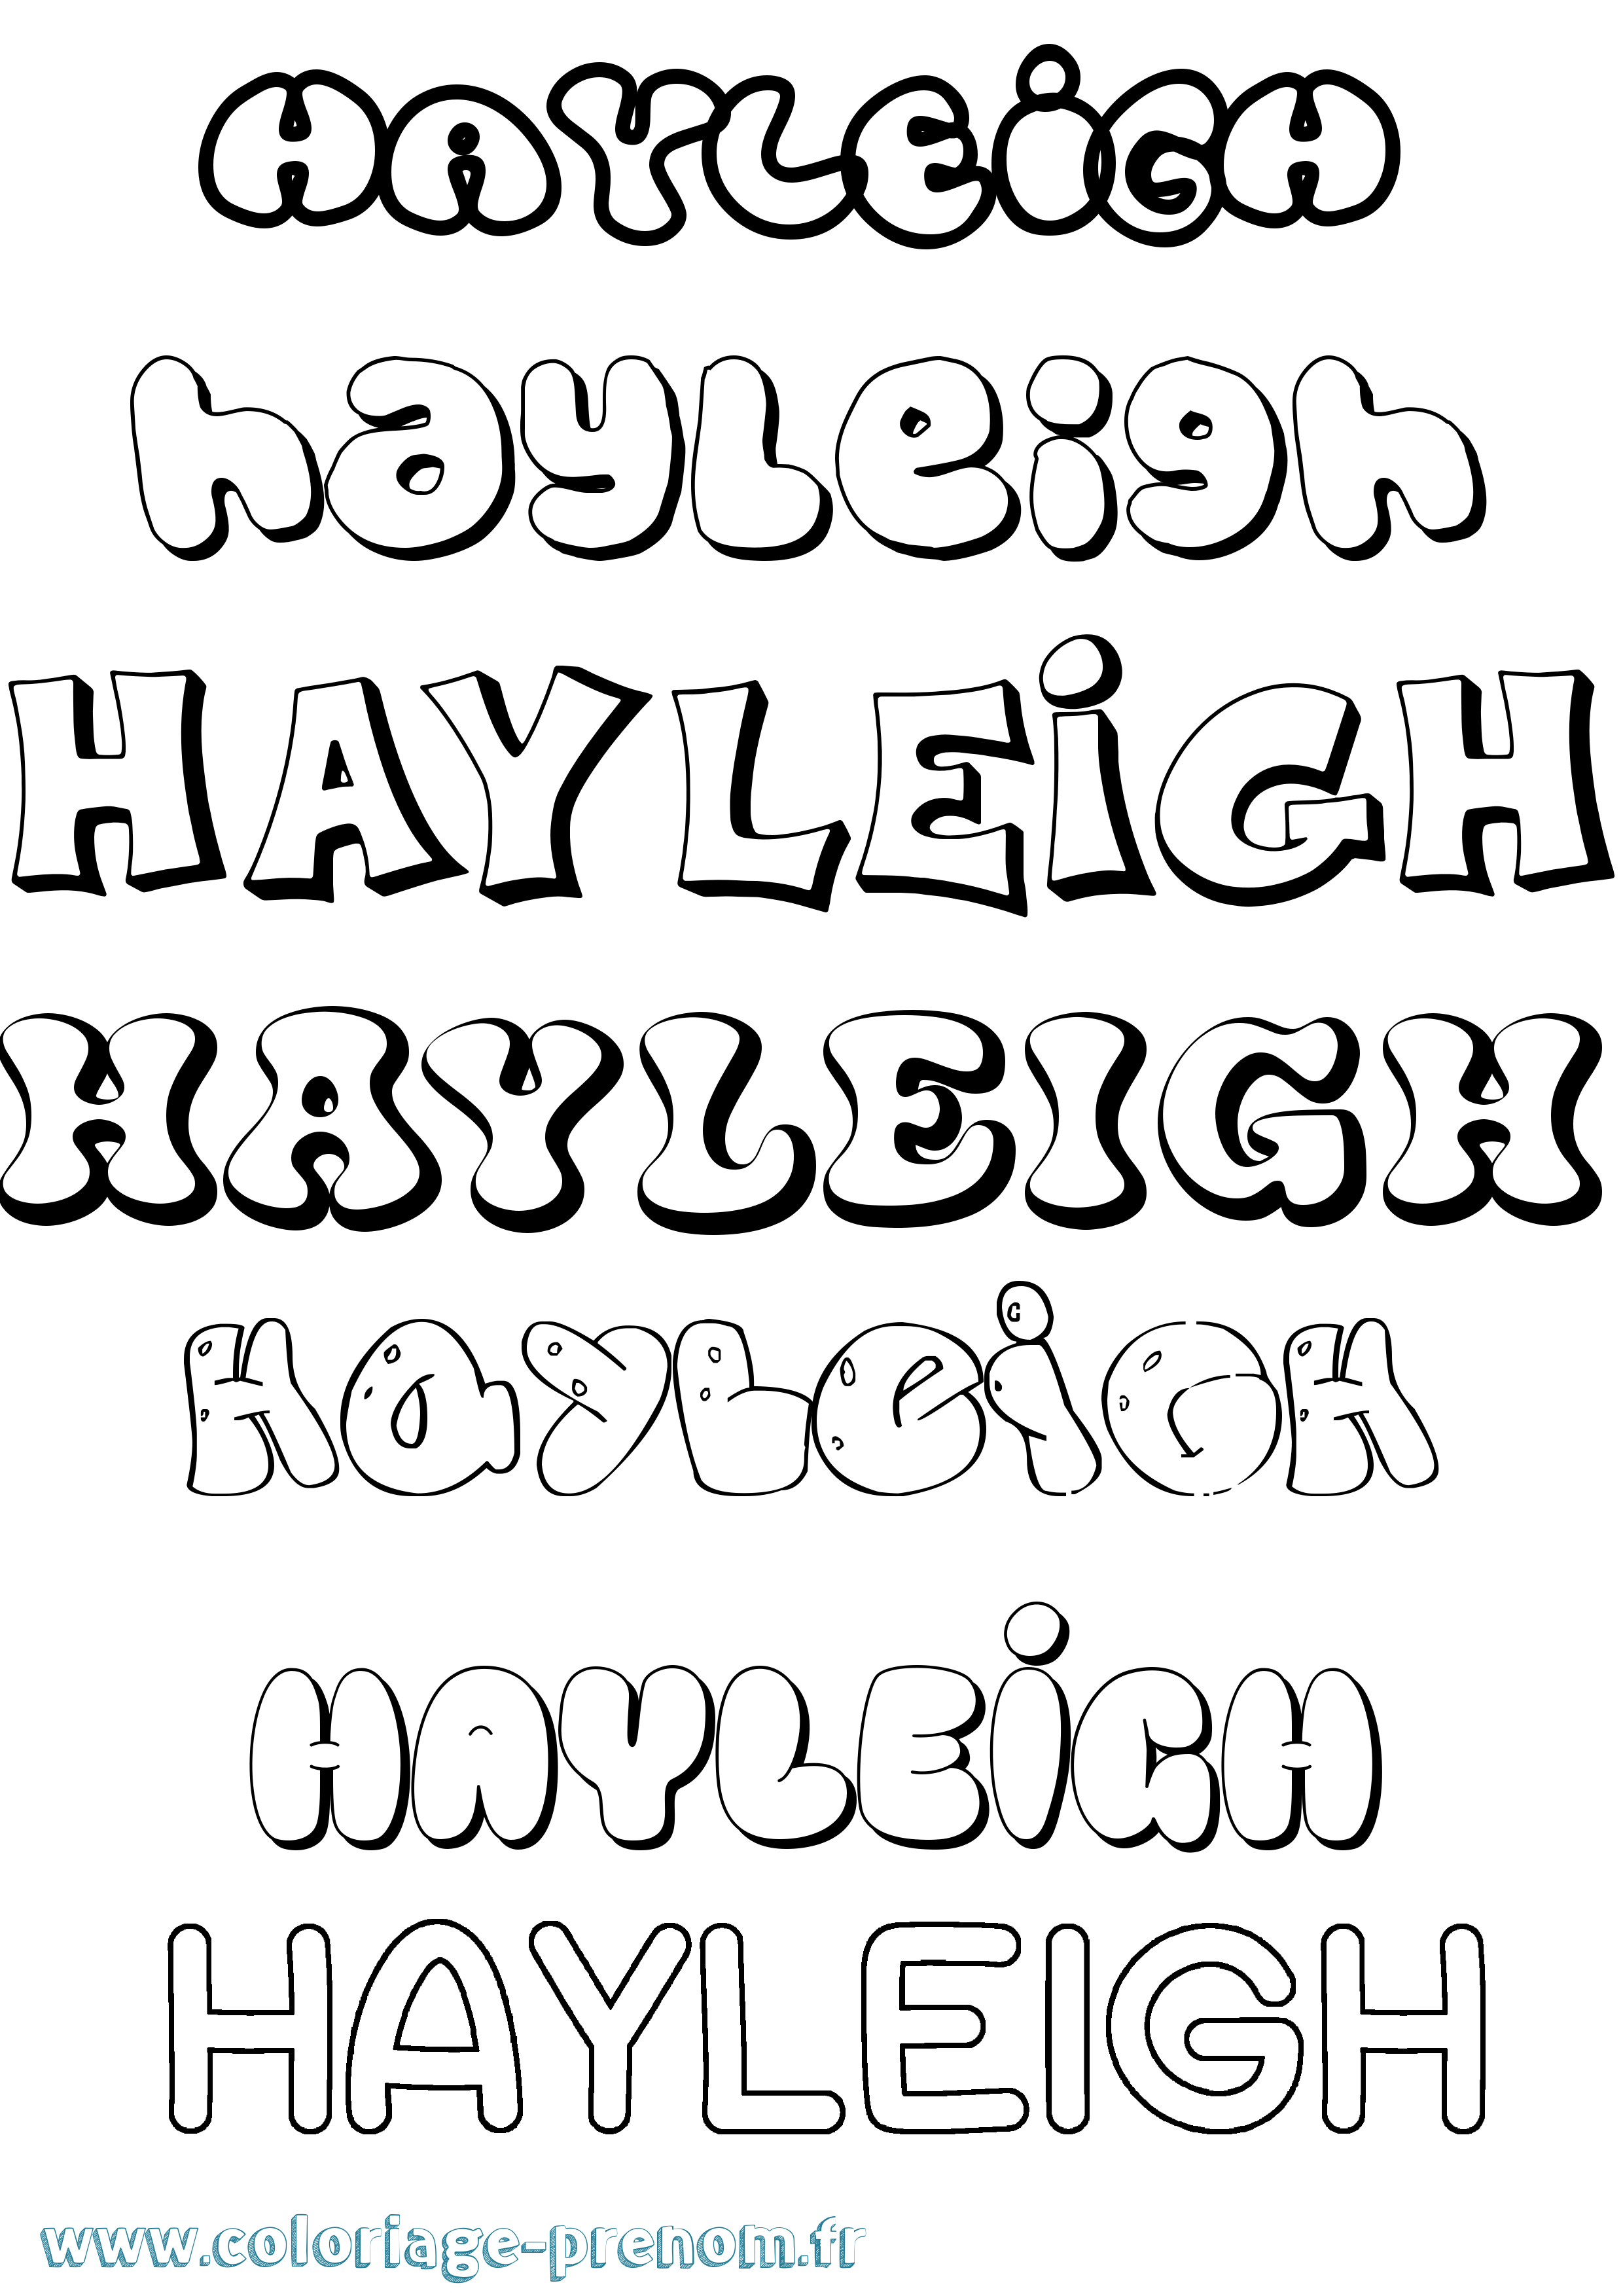 Coloriage prénom Hayleigh Bubble